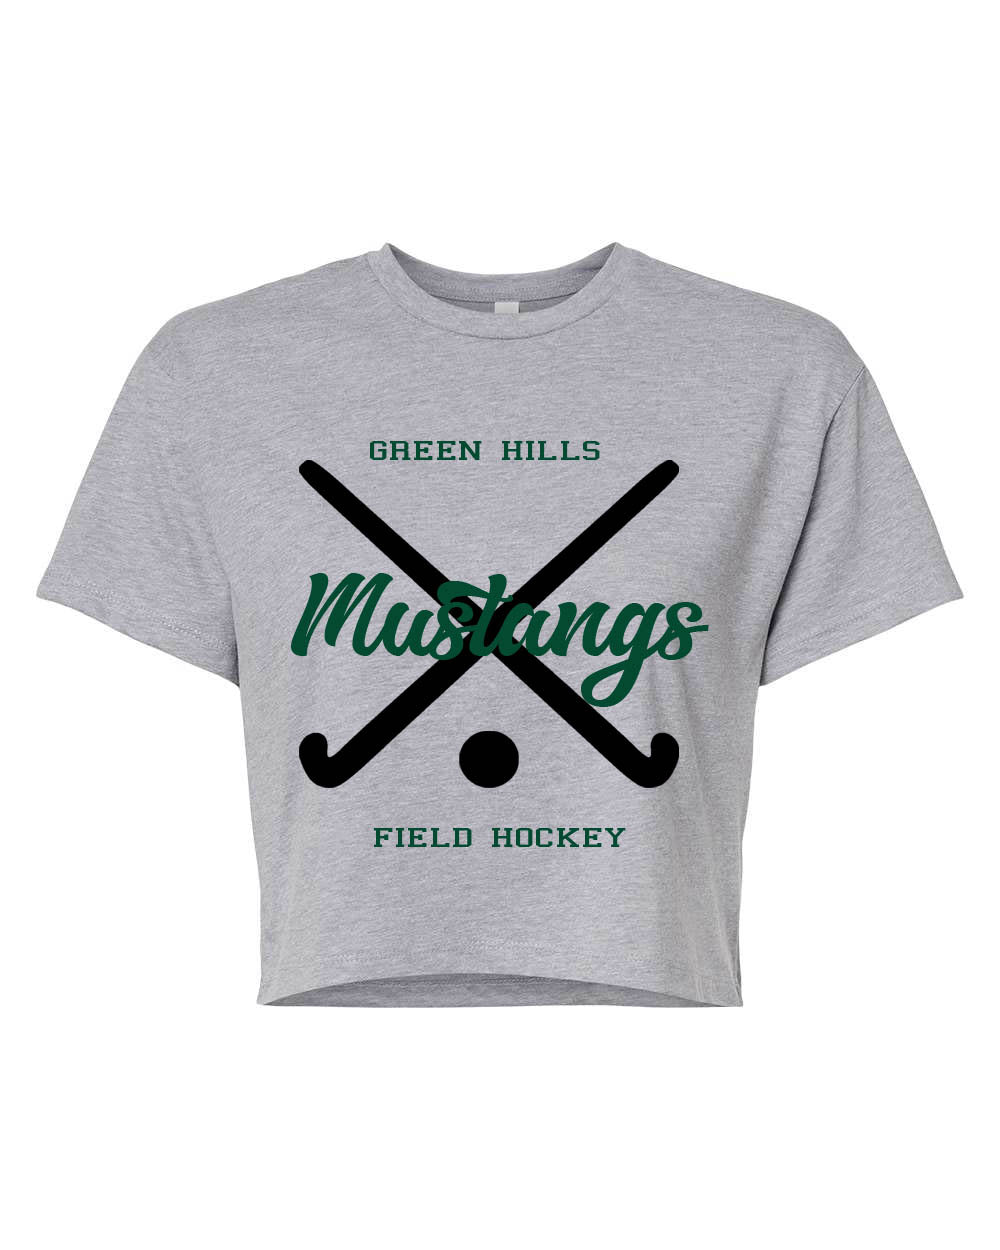 Green Hills Field Hockey design 2 Crop Top